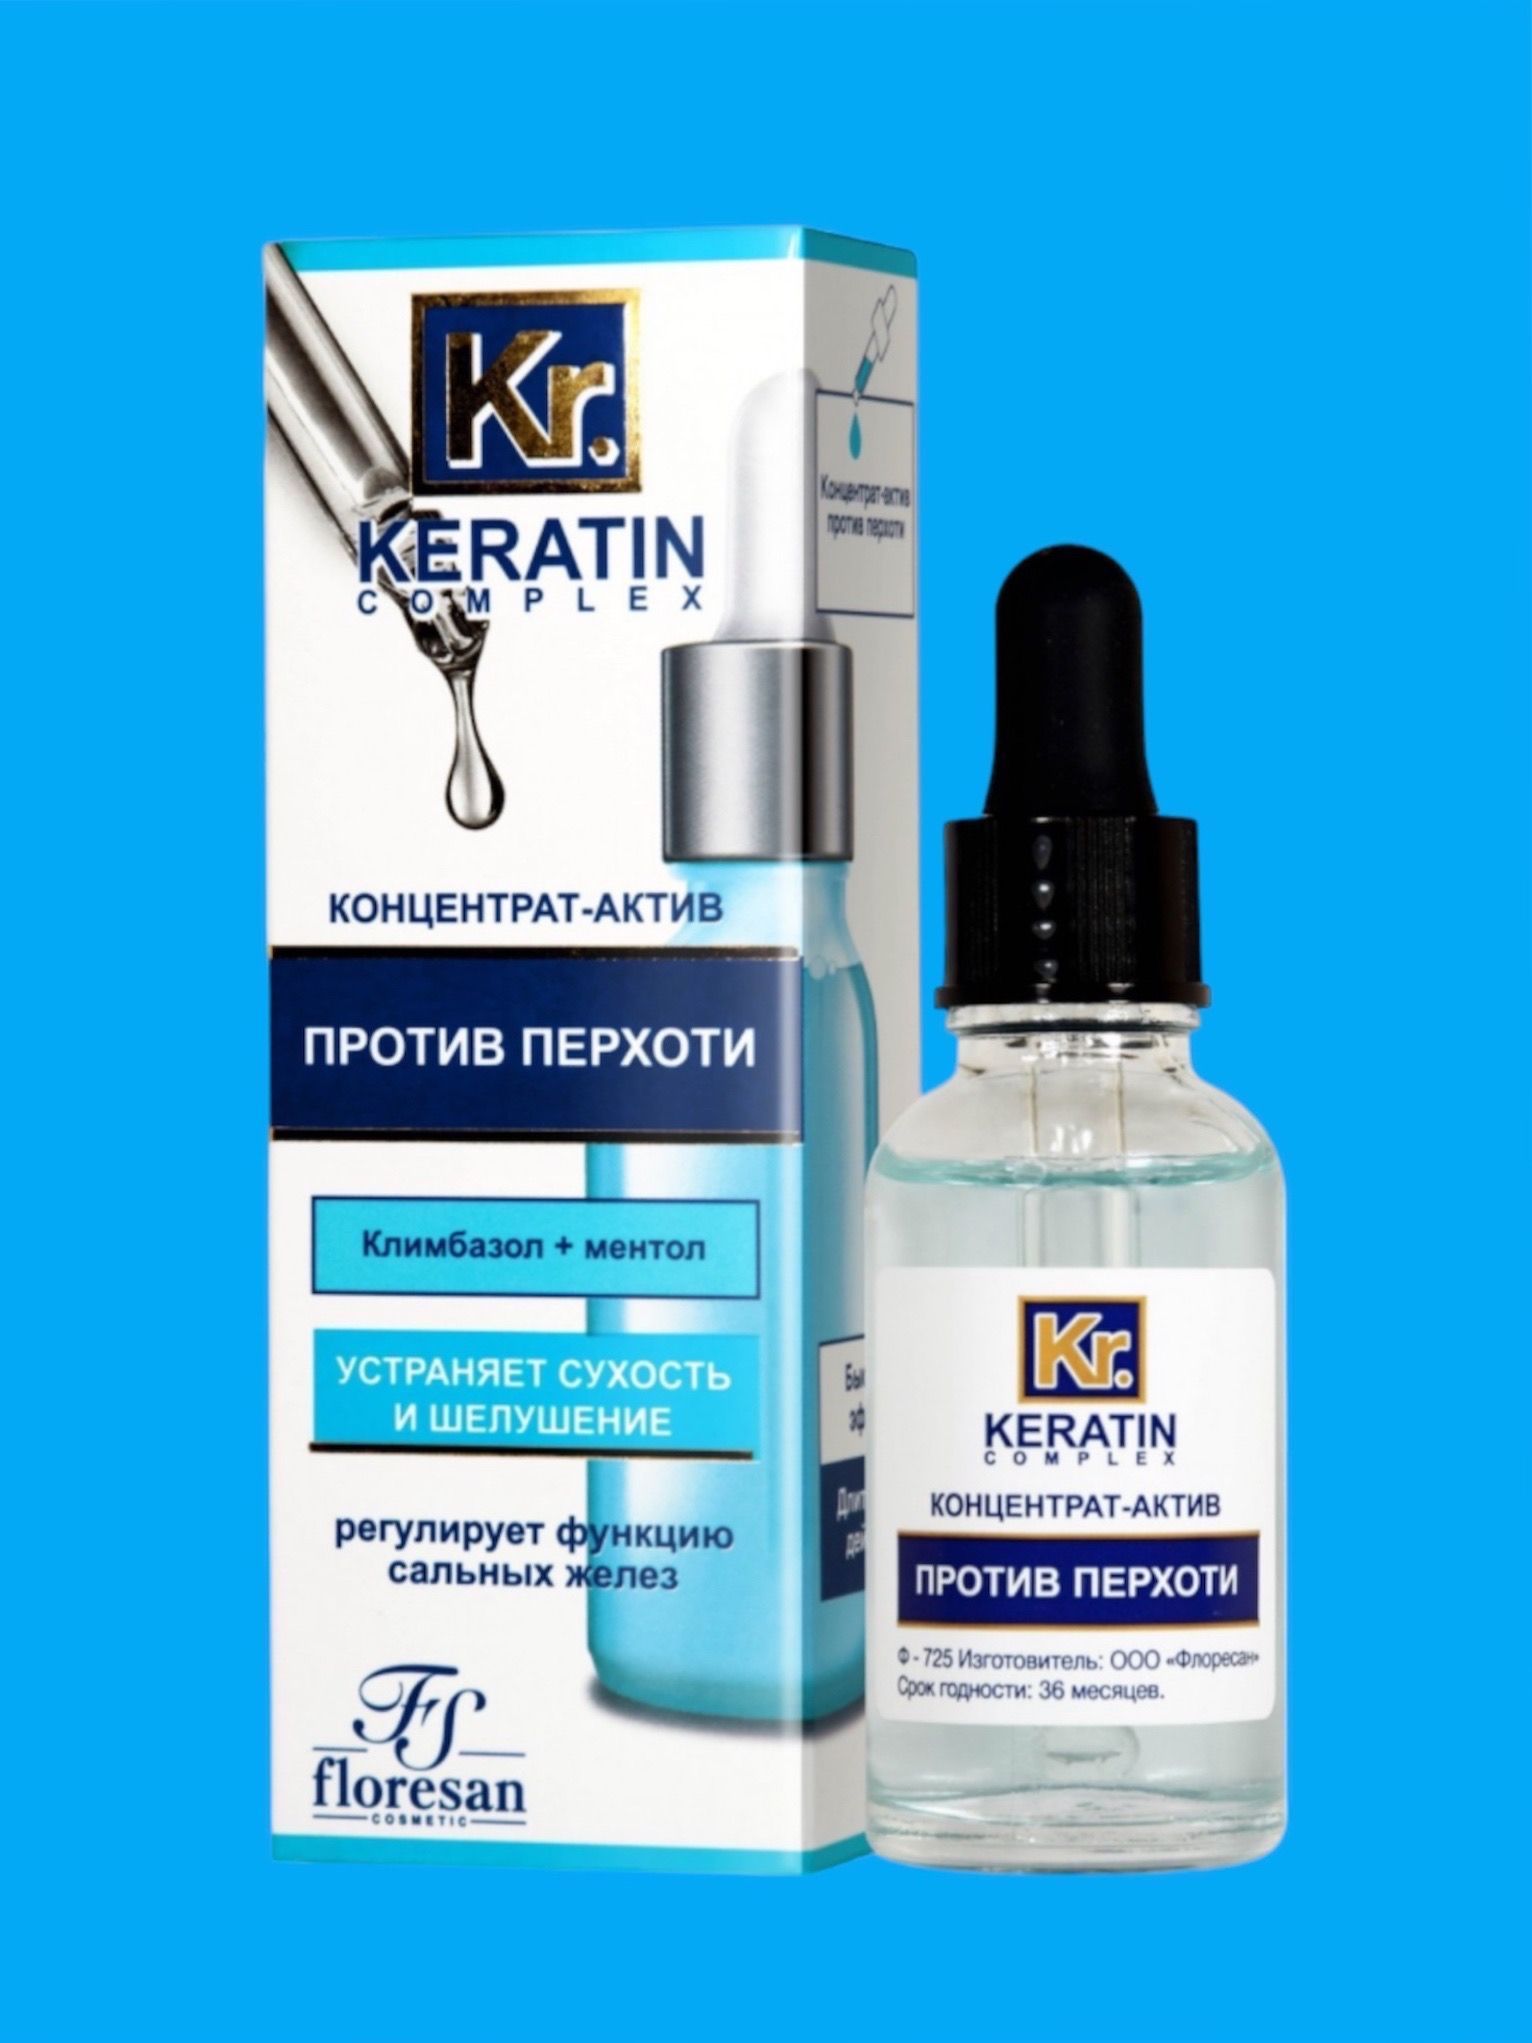 Концентрат актив. Ф-725 концентрат-Актив против перхоти "Keratin Complex" 30 мл.. Флоресан Keratin-Complex концентрат-Актив против перхоти, 30мл. Сыворотка концентрат кератин. Сыворотка концентрат кератин, коллаген.